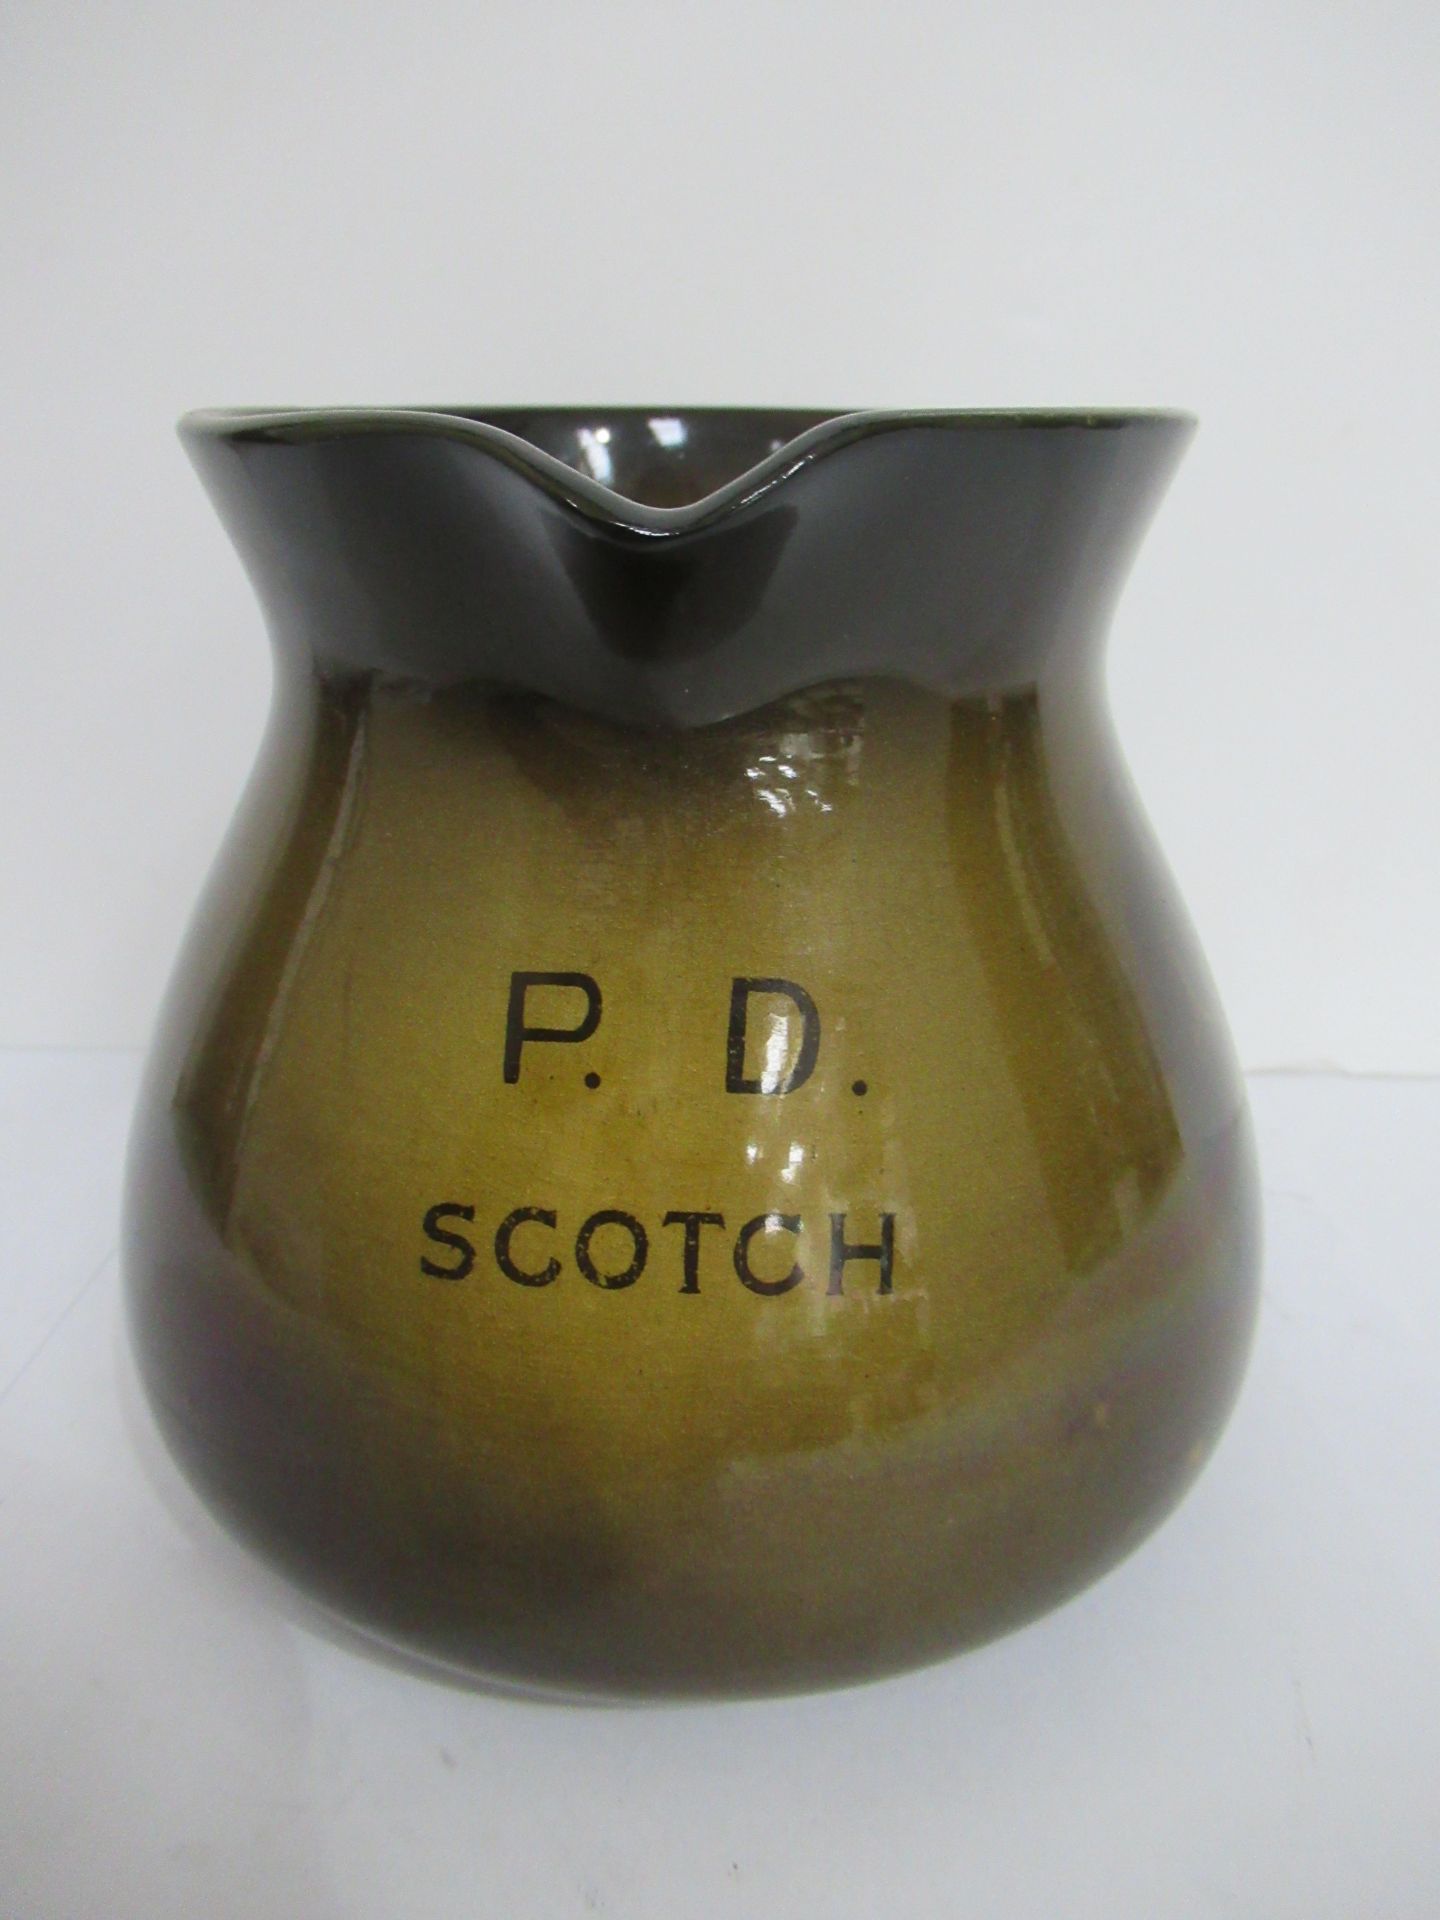 Peter Dawson scotch whisky 'P.D' jug - Image 2 of 6